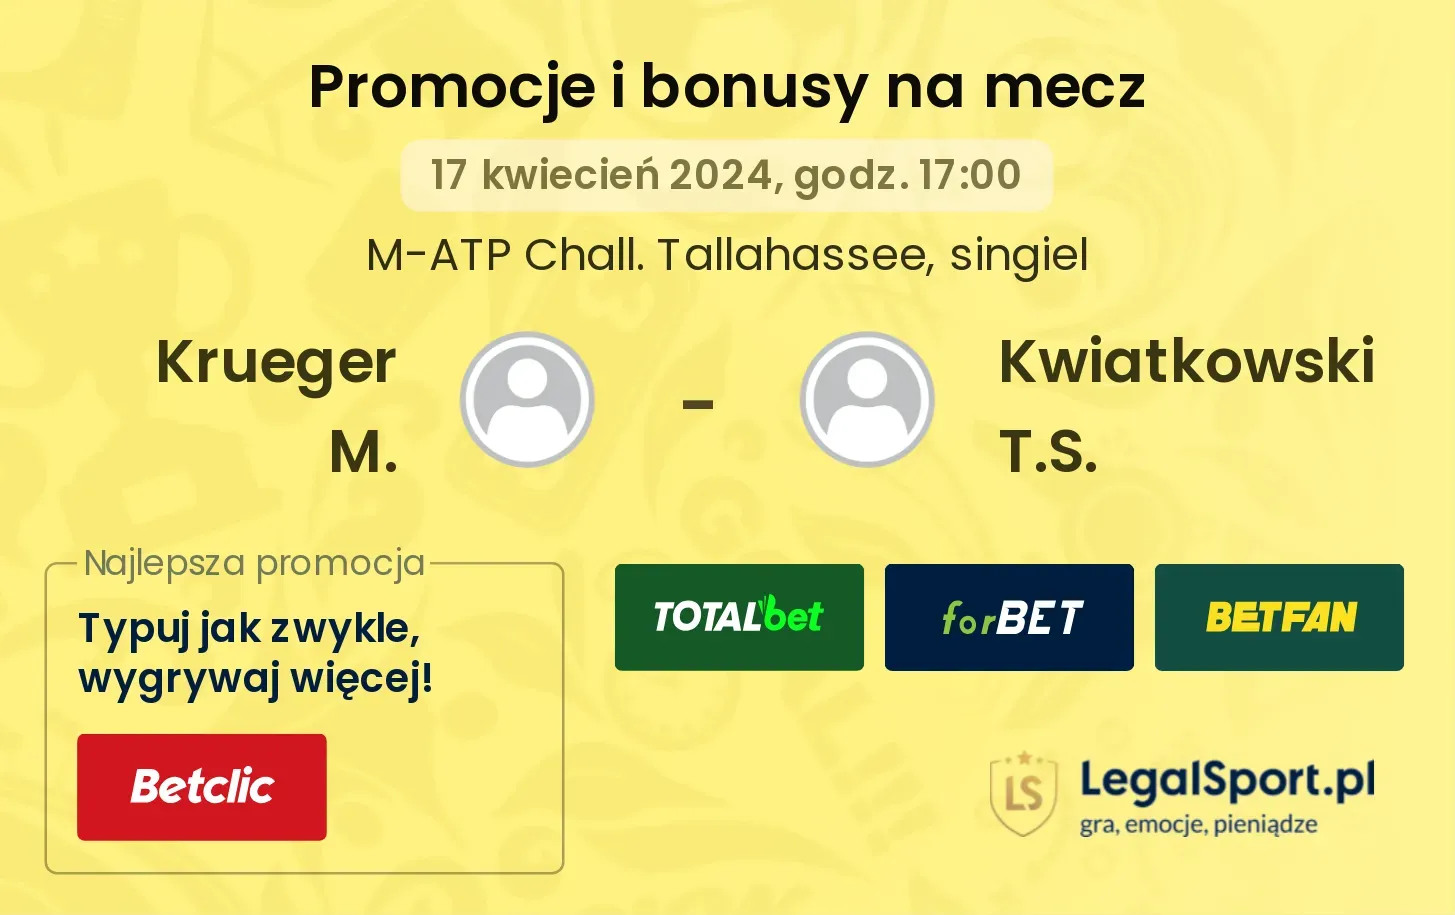 Krueger M. - Kwiatkowski T.S. promocje bonusy na mecz